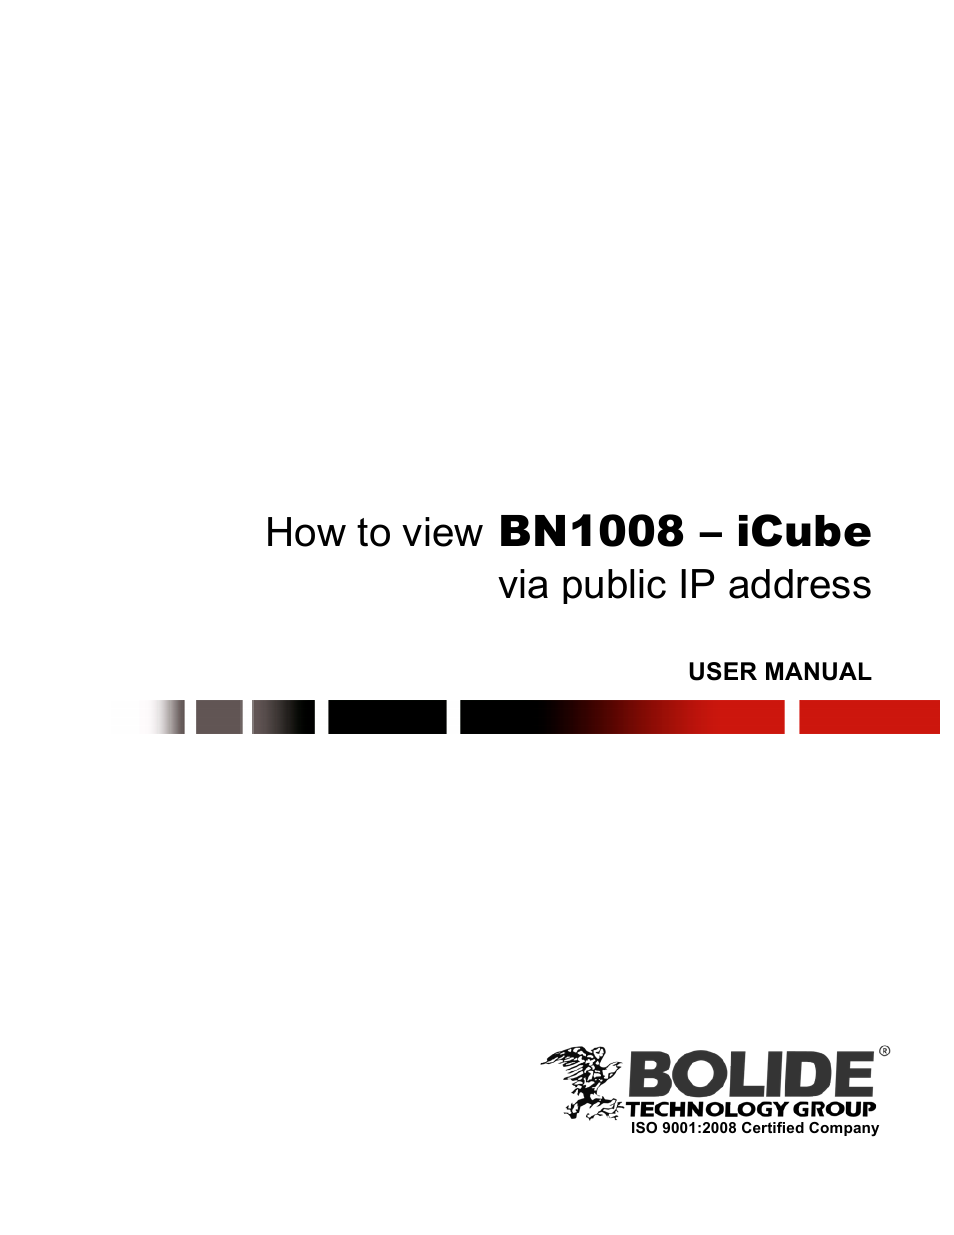 BN1008 – iCube via public IP address